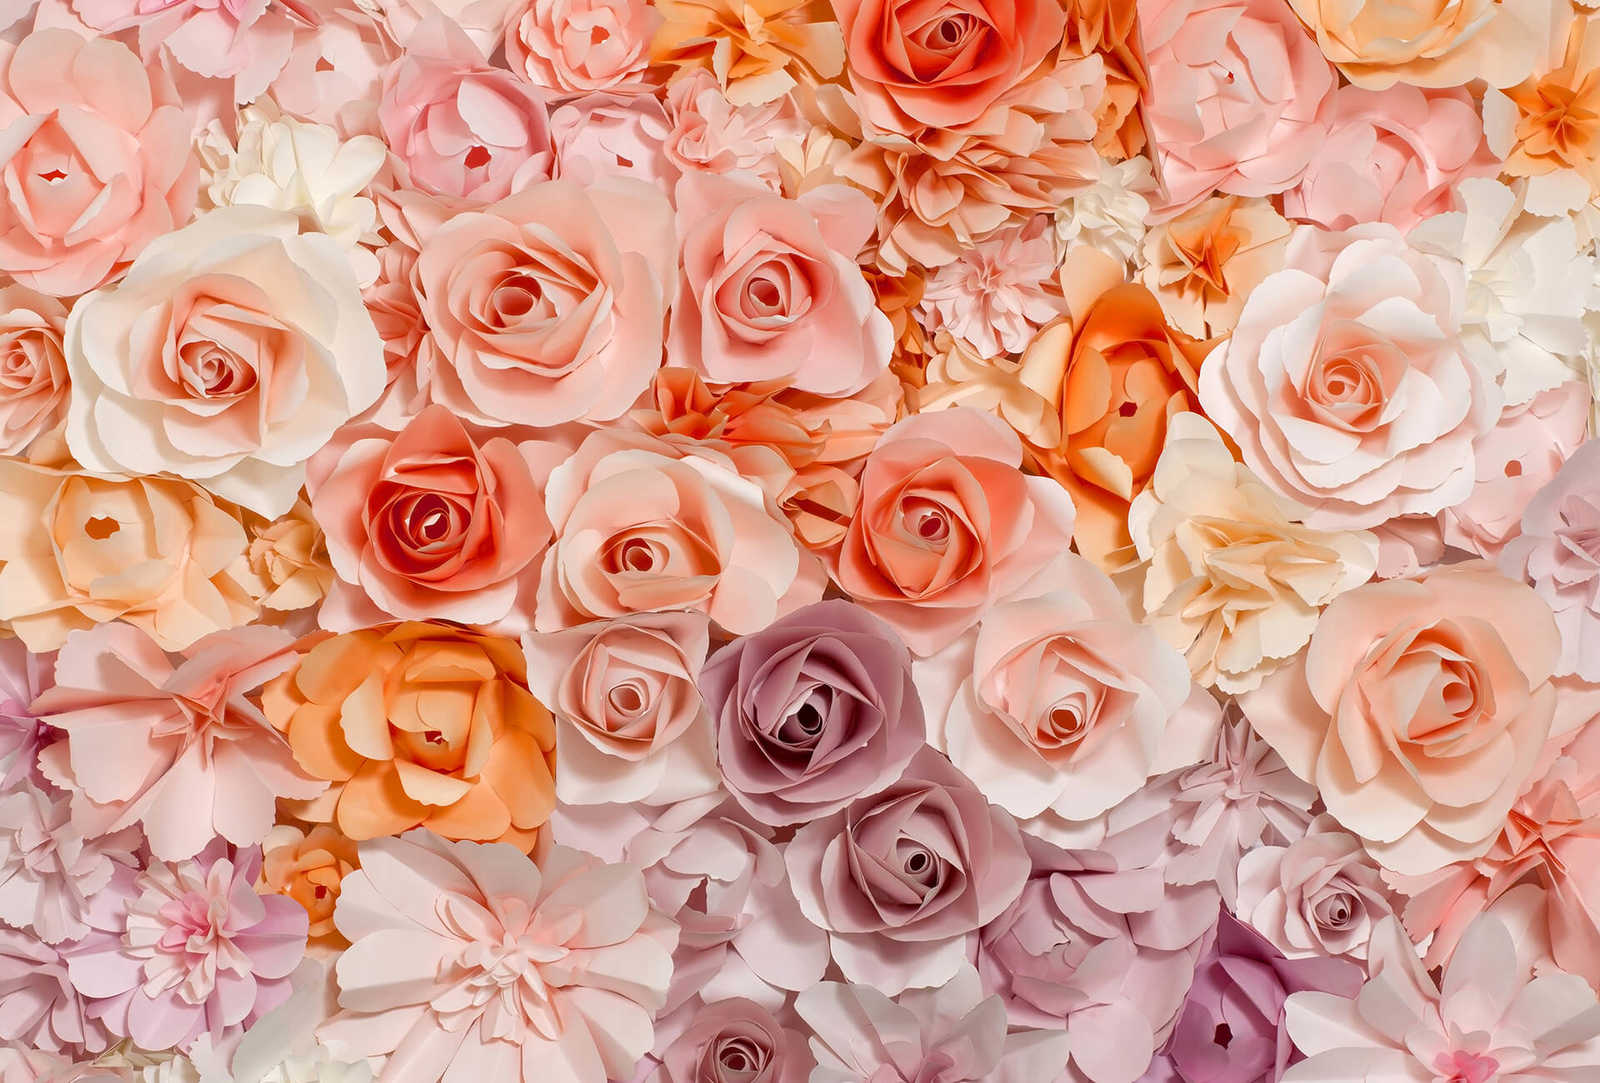 Roses mural 3D floral pattern - pink, white, orange
